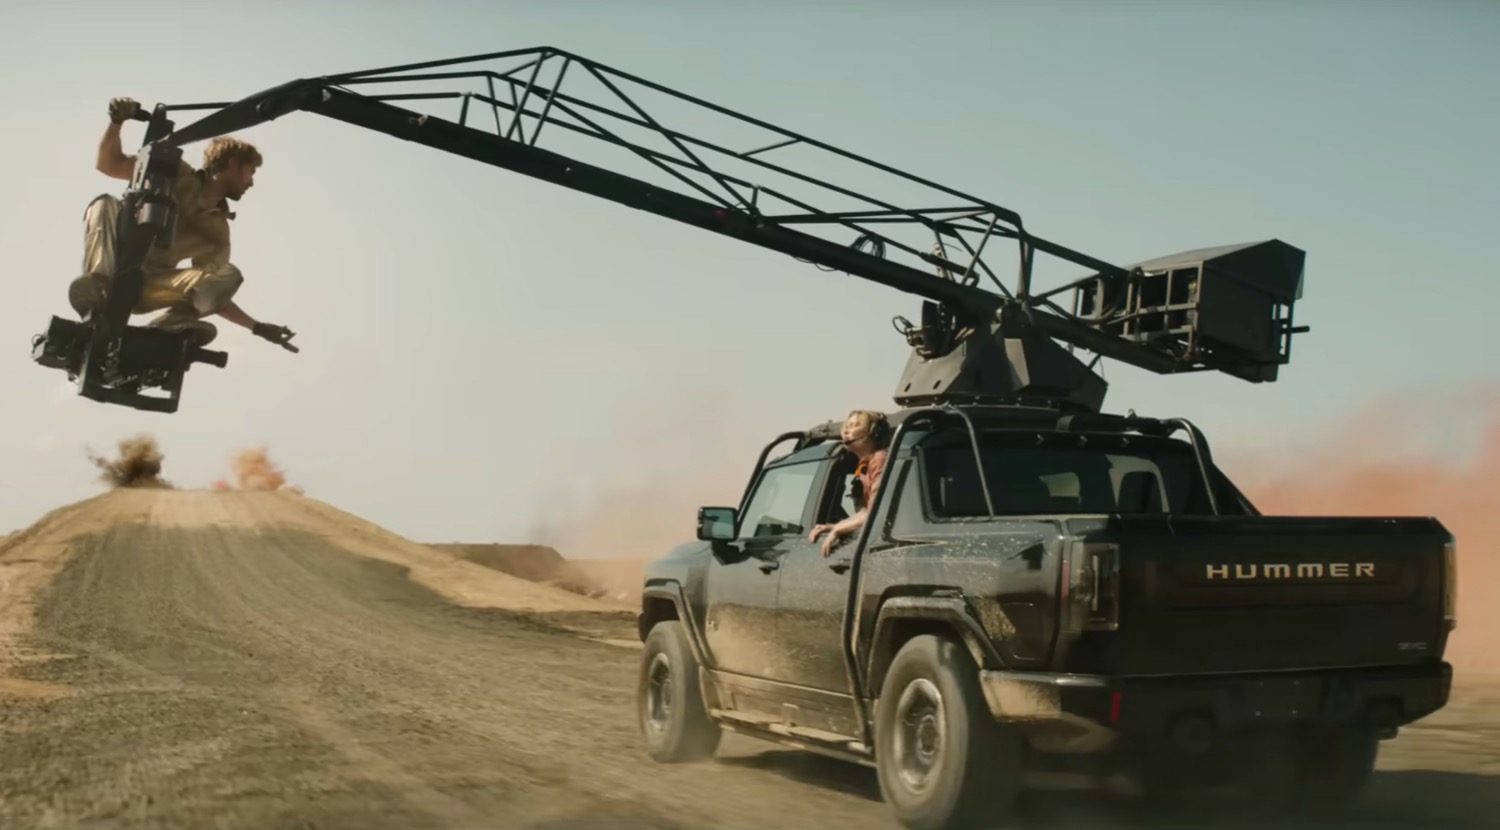 The Fall Guy Movie Remake Stars Ryan Gosling And Brown GMC Trucks